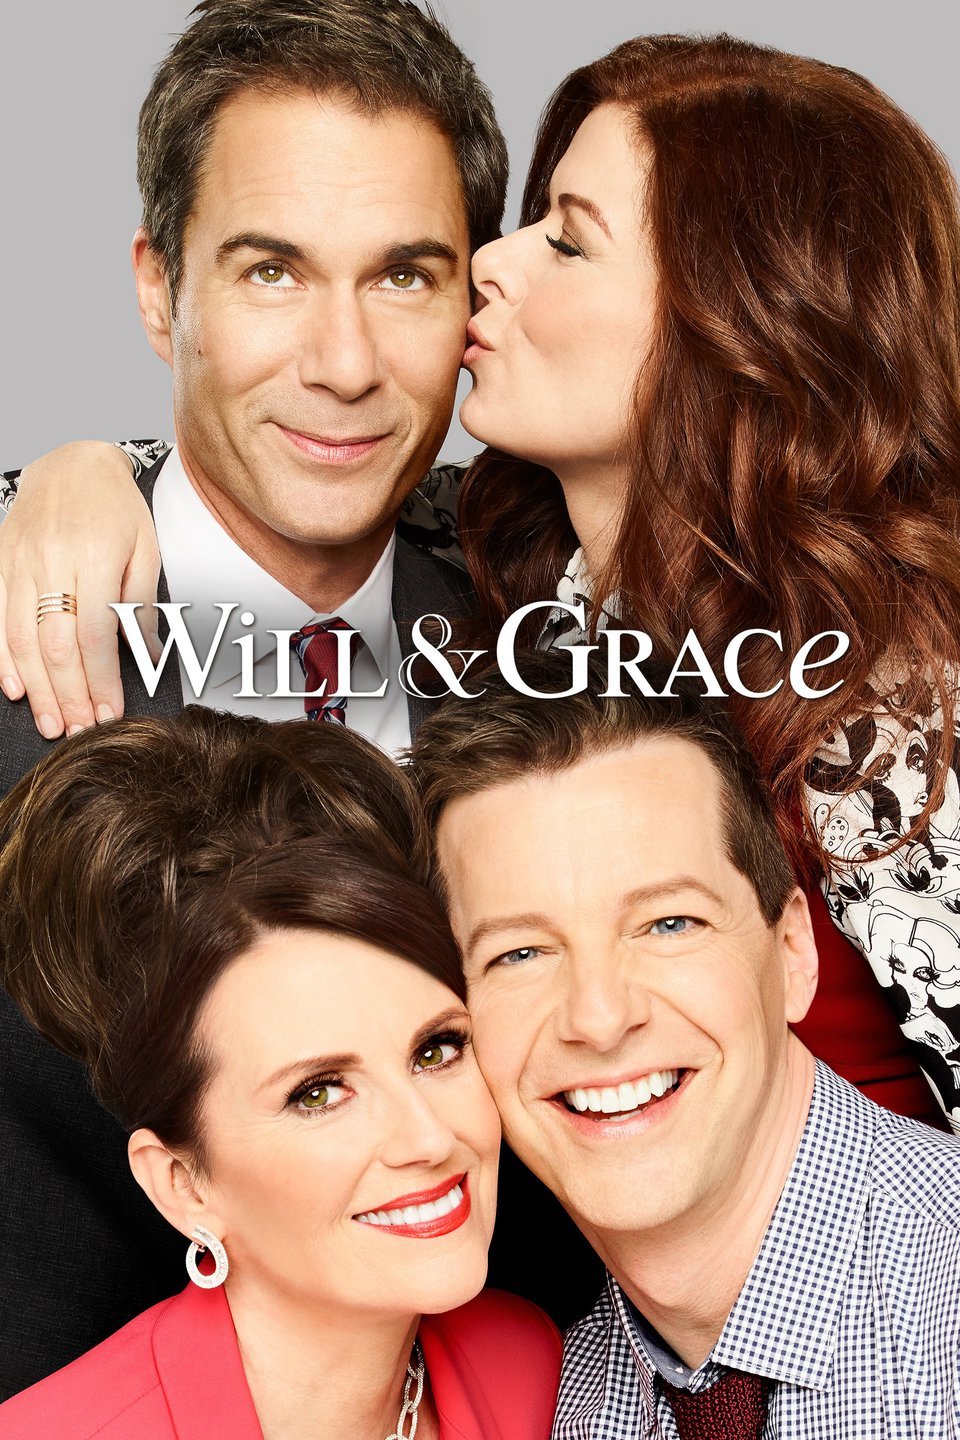 Matt Bomer cast as Will's love interest on 'Will & Grace